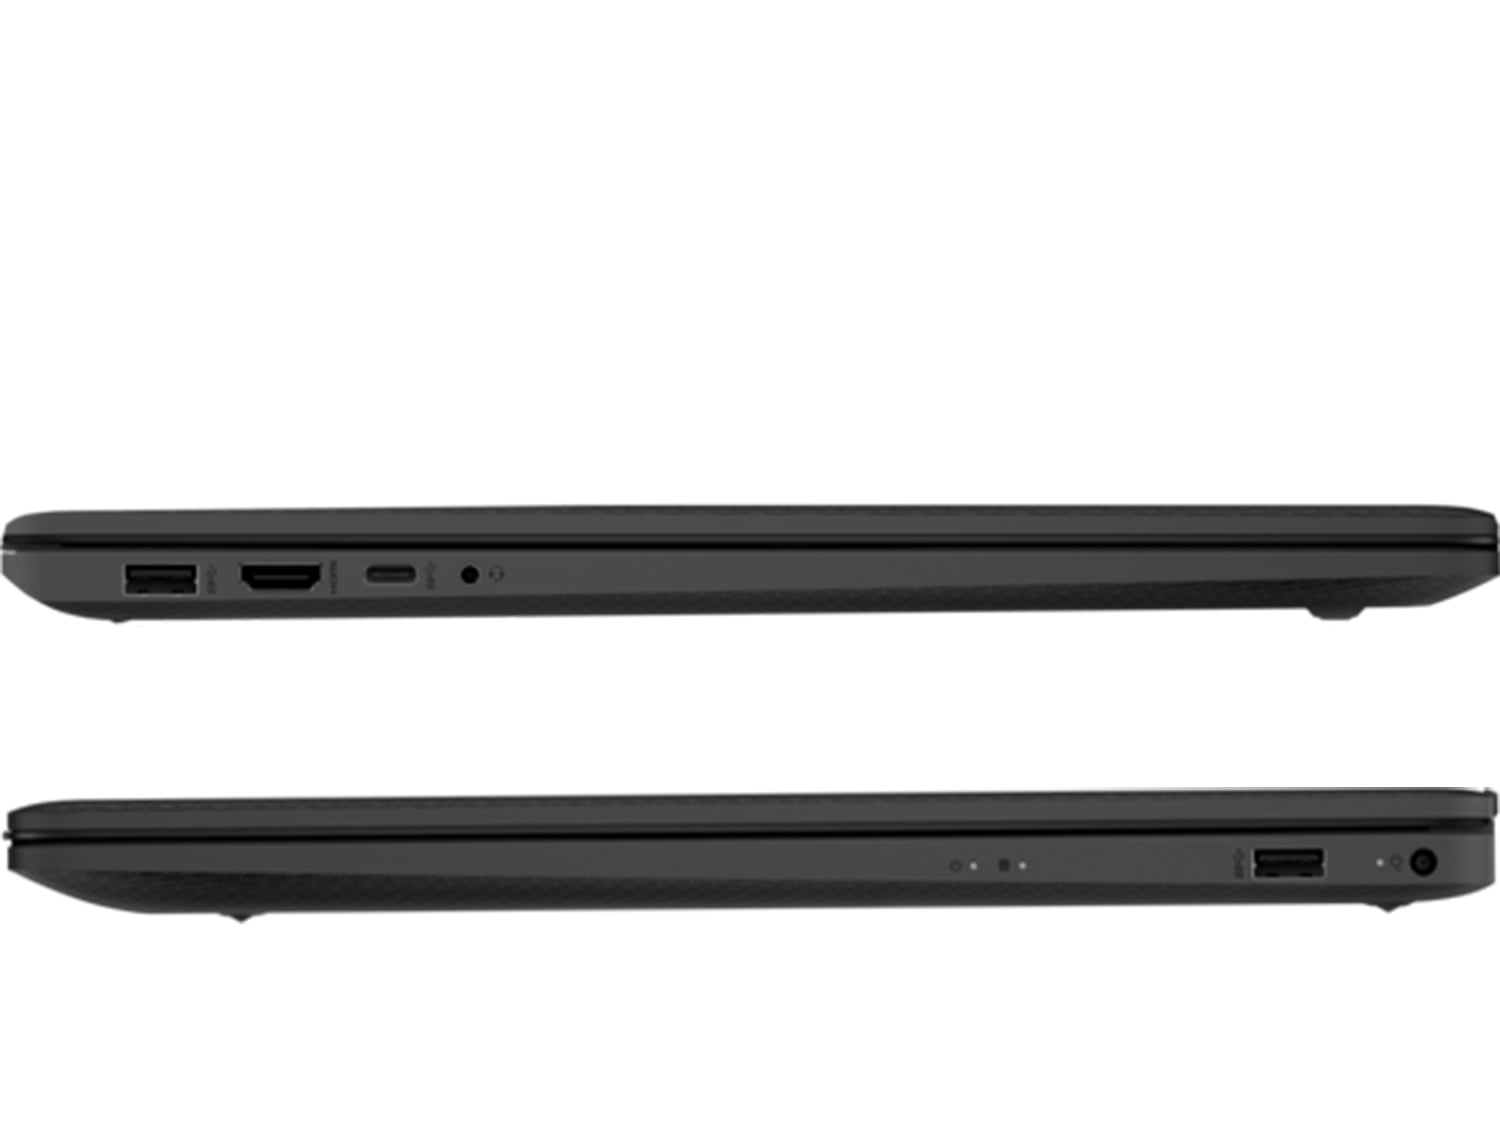 2022 Newest HP 17z Laptop, 17.3